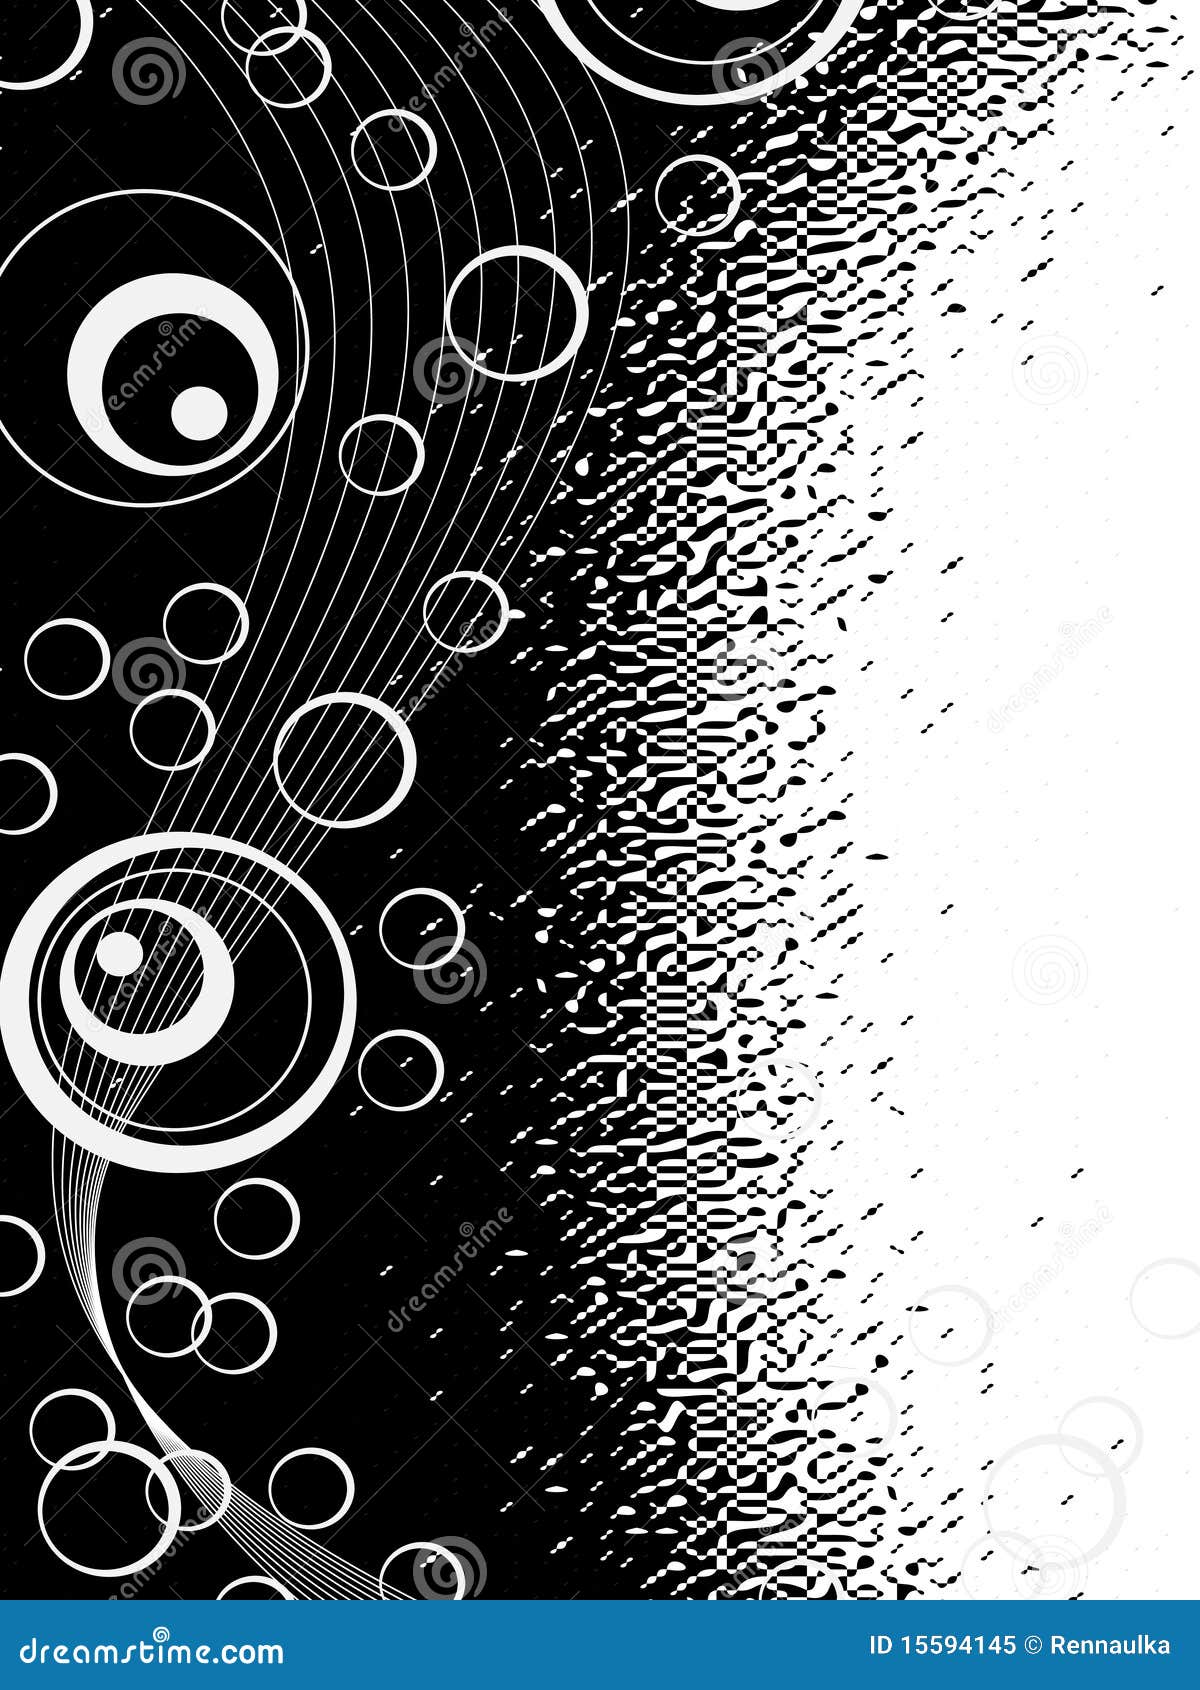 Vector Black White Background Stock Vector - Illustration of creative,  label: 15594145